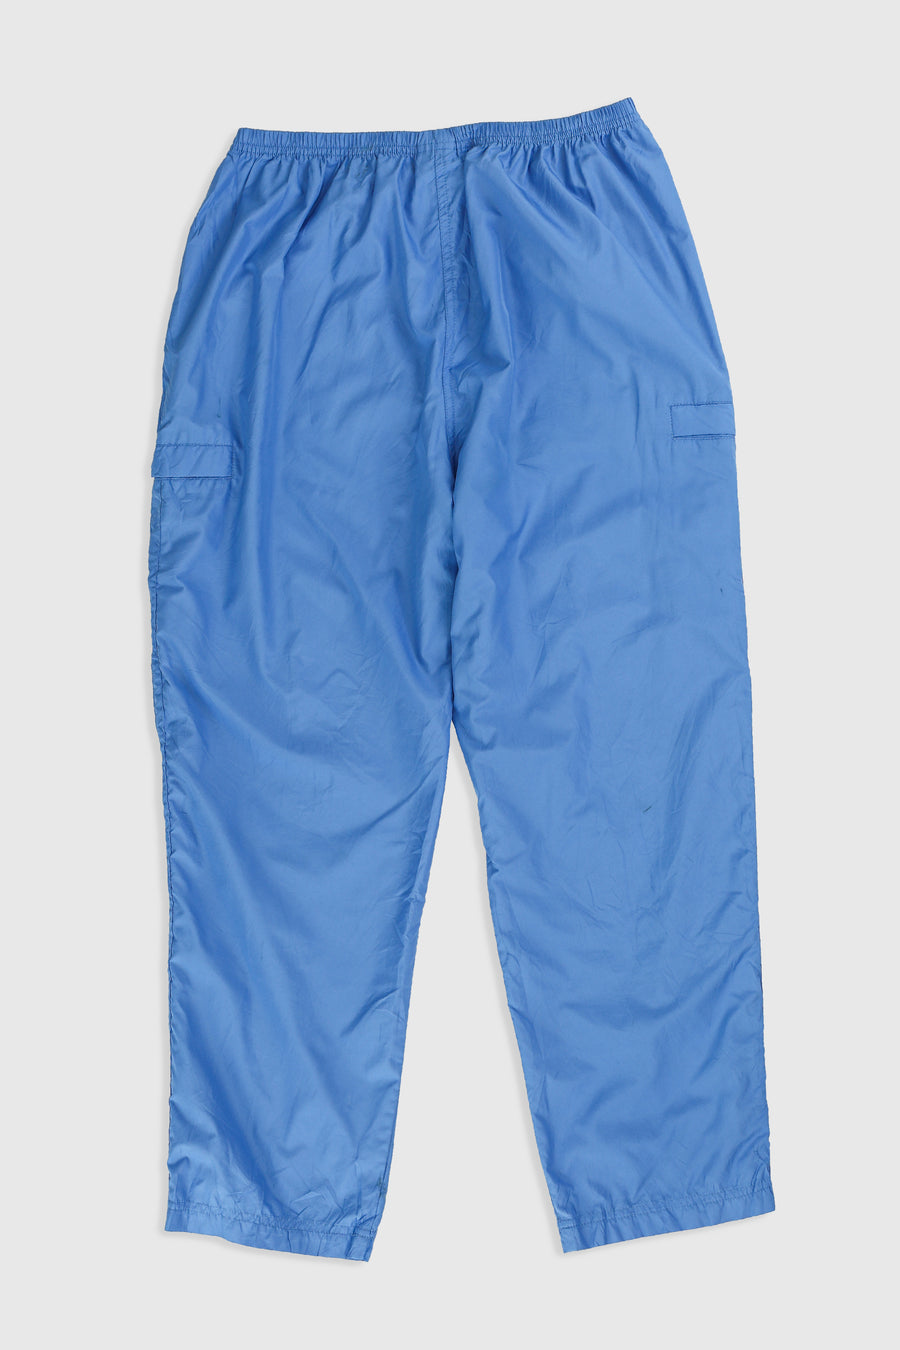 Vintage Nike Track Windbreaker Lined Pants Women SZ M Blue Elastic Waist